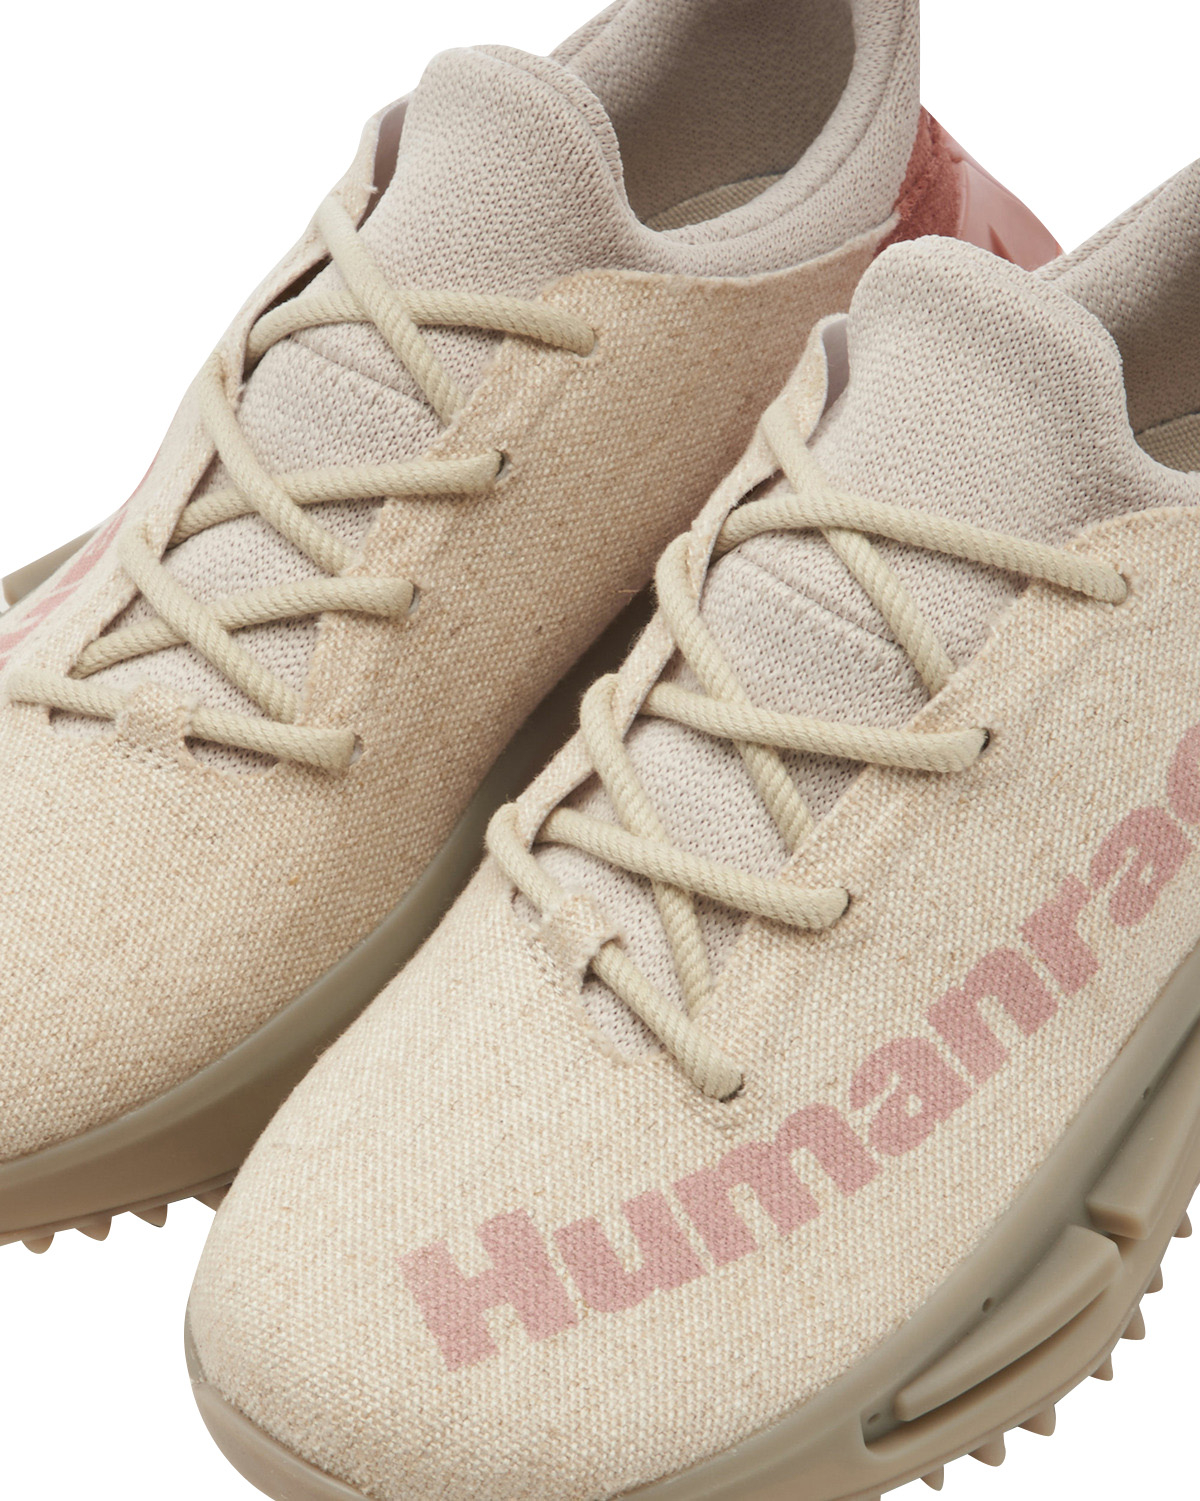 Pharrell adidas Humanrace NMD S1 Beige Blue Release Info